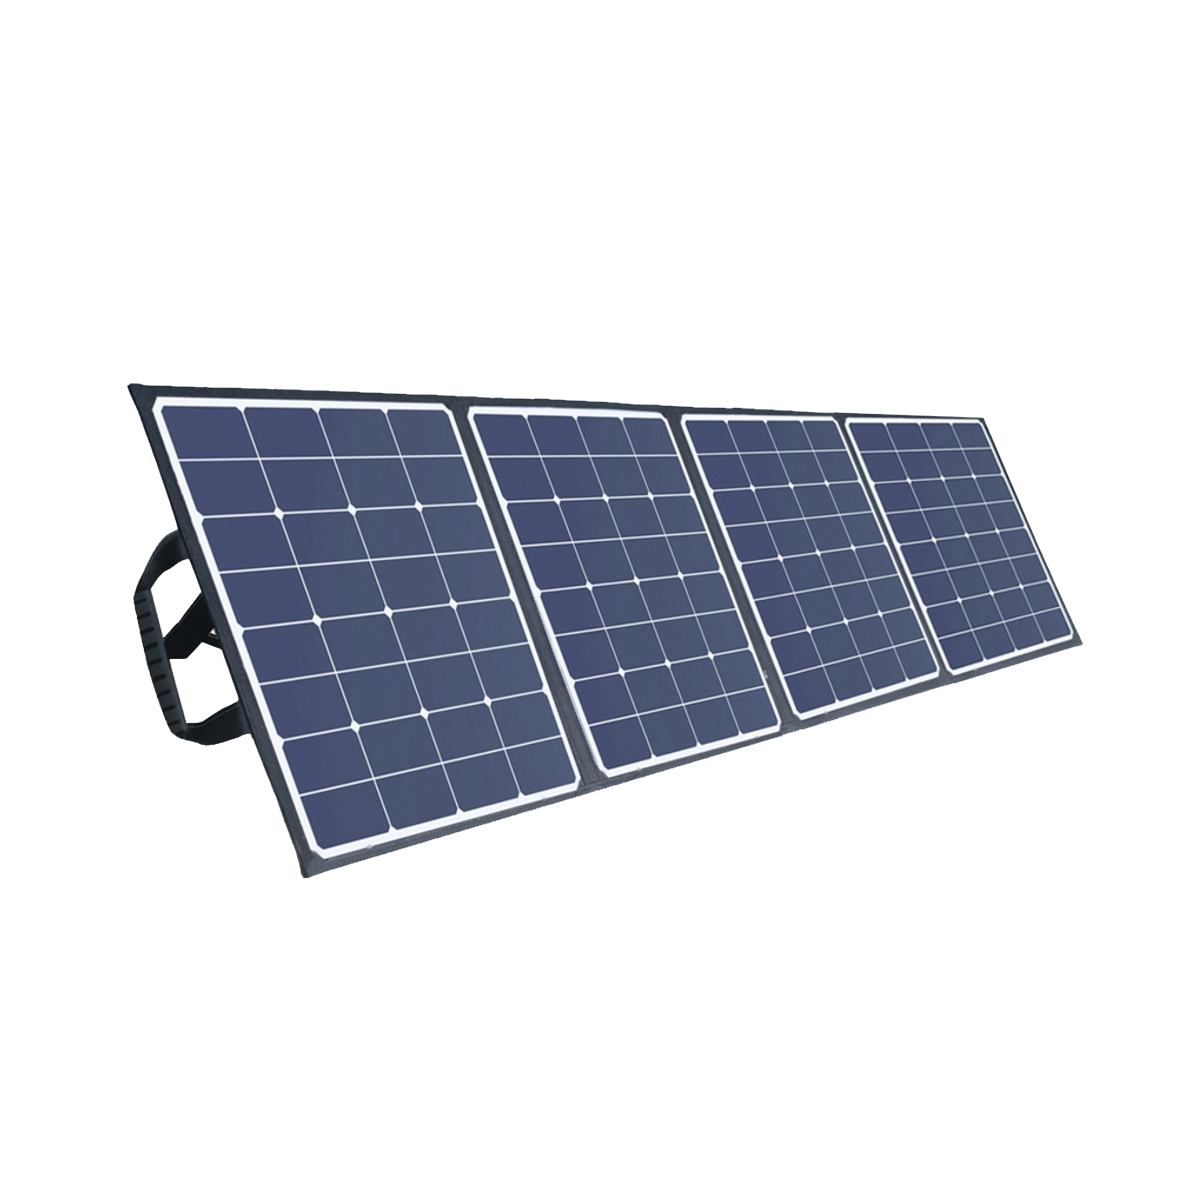 Southwire Elite Series 53224 Monocrystalline Portable Solar Panel, 100 W, 18 V, ETFE